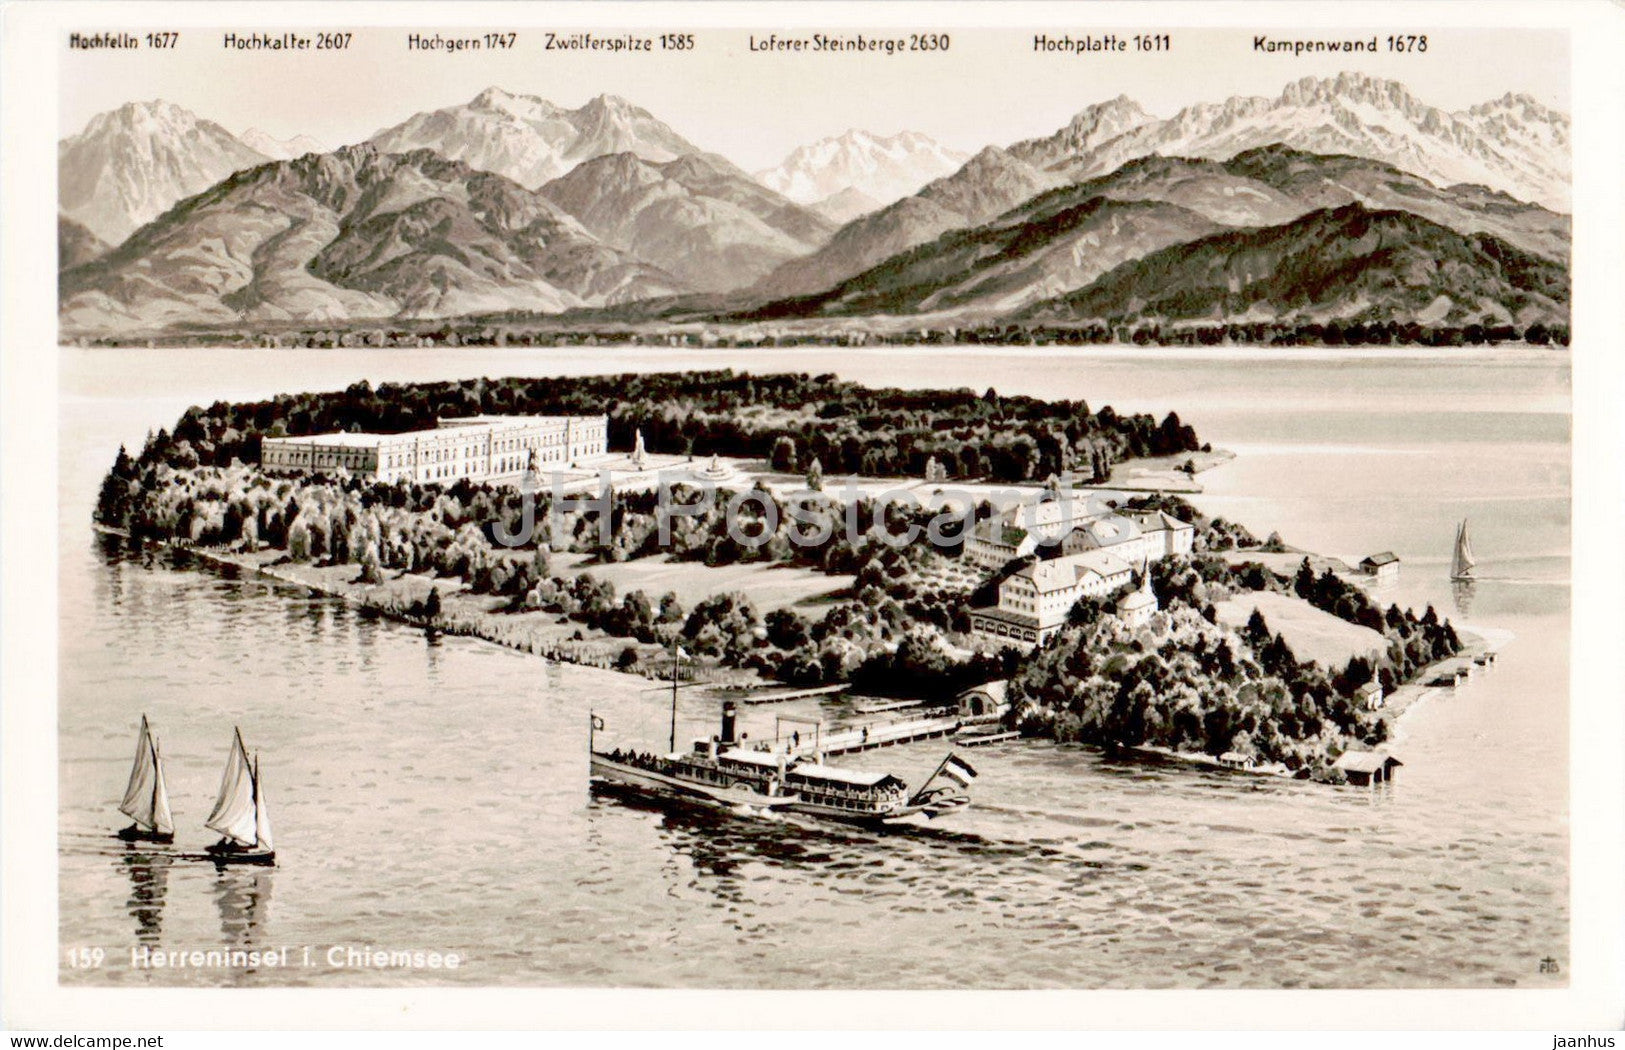 Herreninsel i Chiemsee - 159 - old postcard - 1950 - Germany - used - JH Postcards